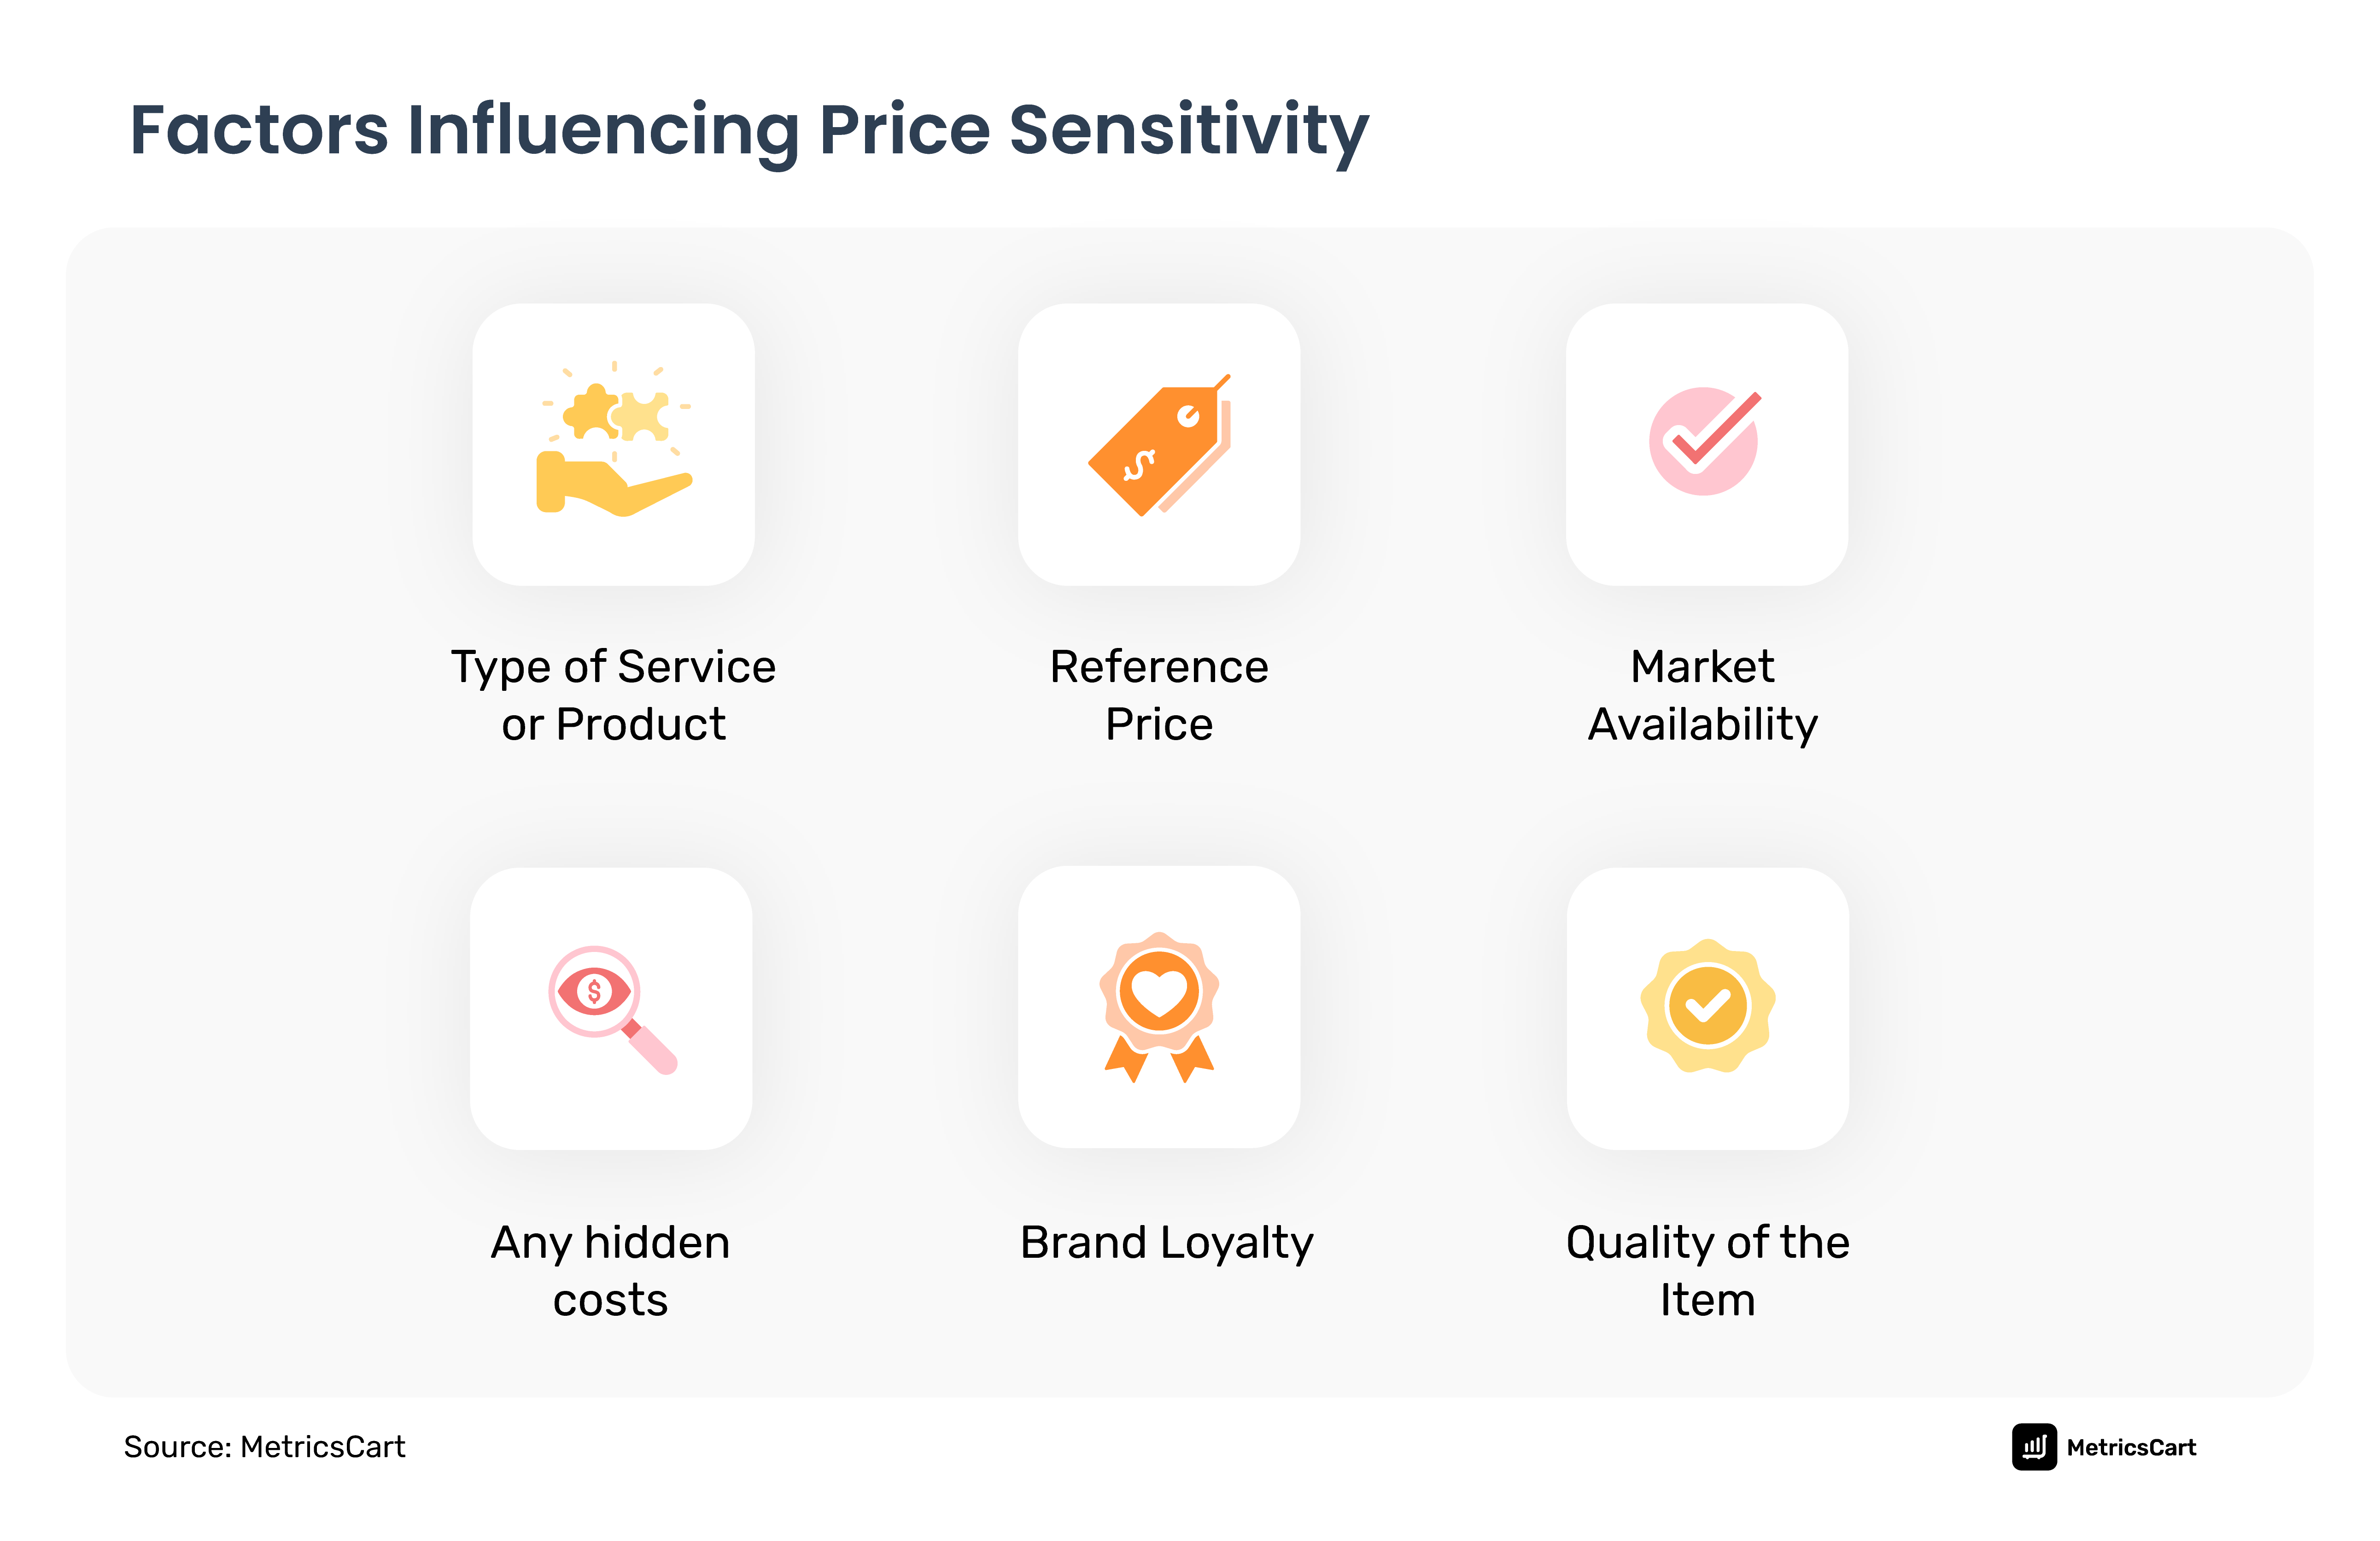 Factors influencing price sensitivity